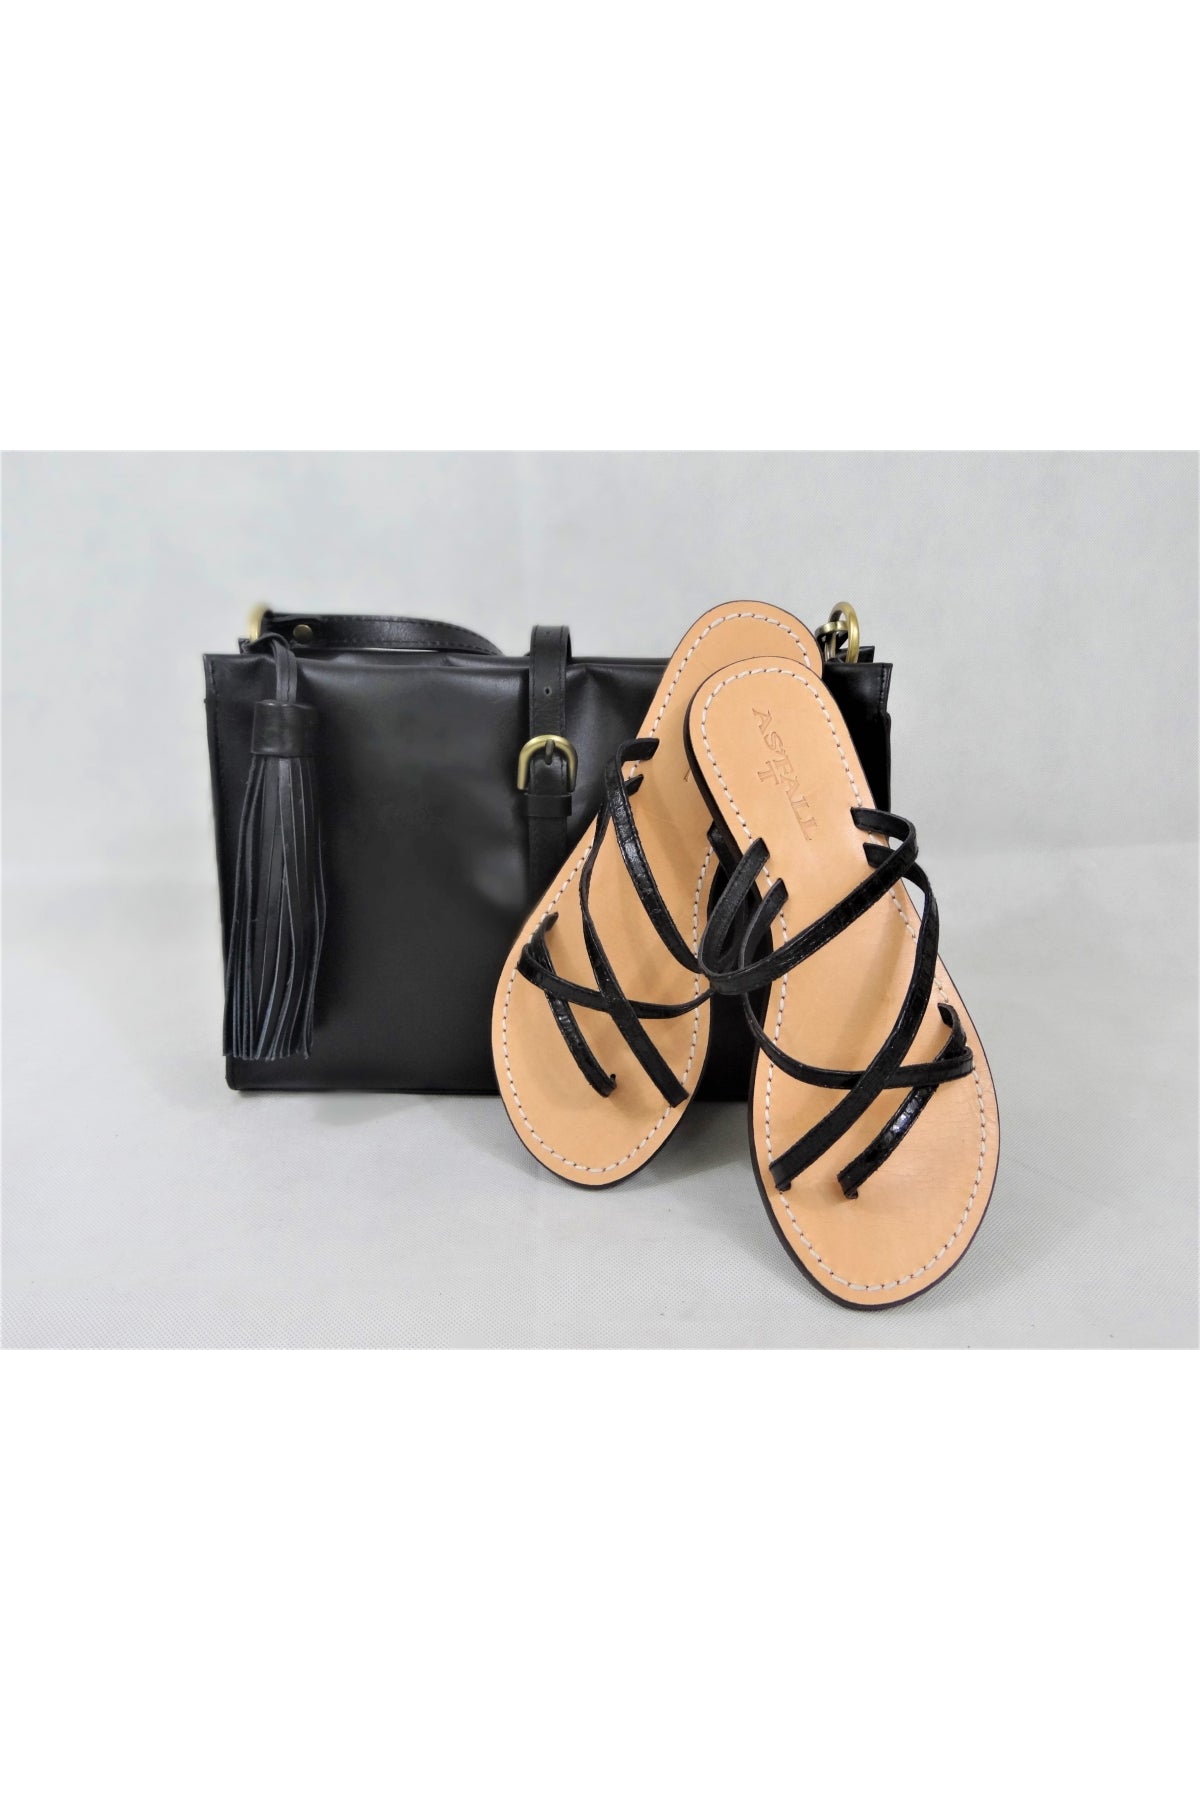 Handmade SIGNATURE Leather Sandals